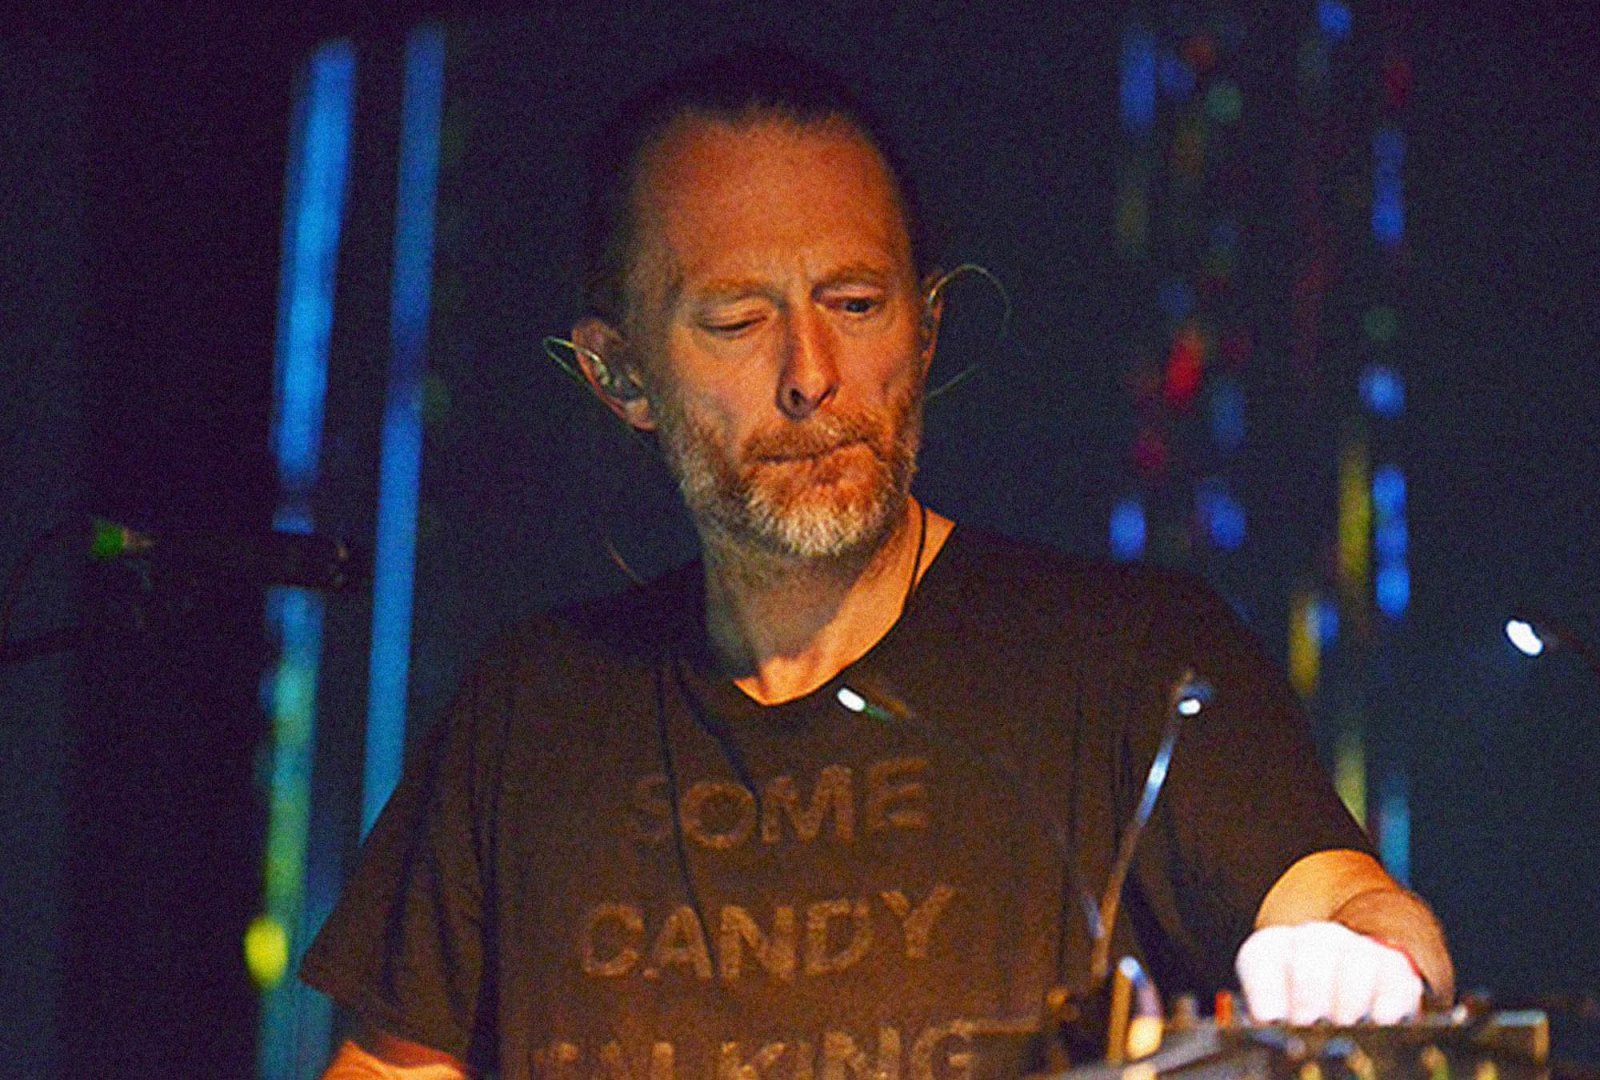 Radiohead's Thom Yorke Confirmed to Score First Film - 'Suspiria'